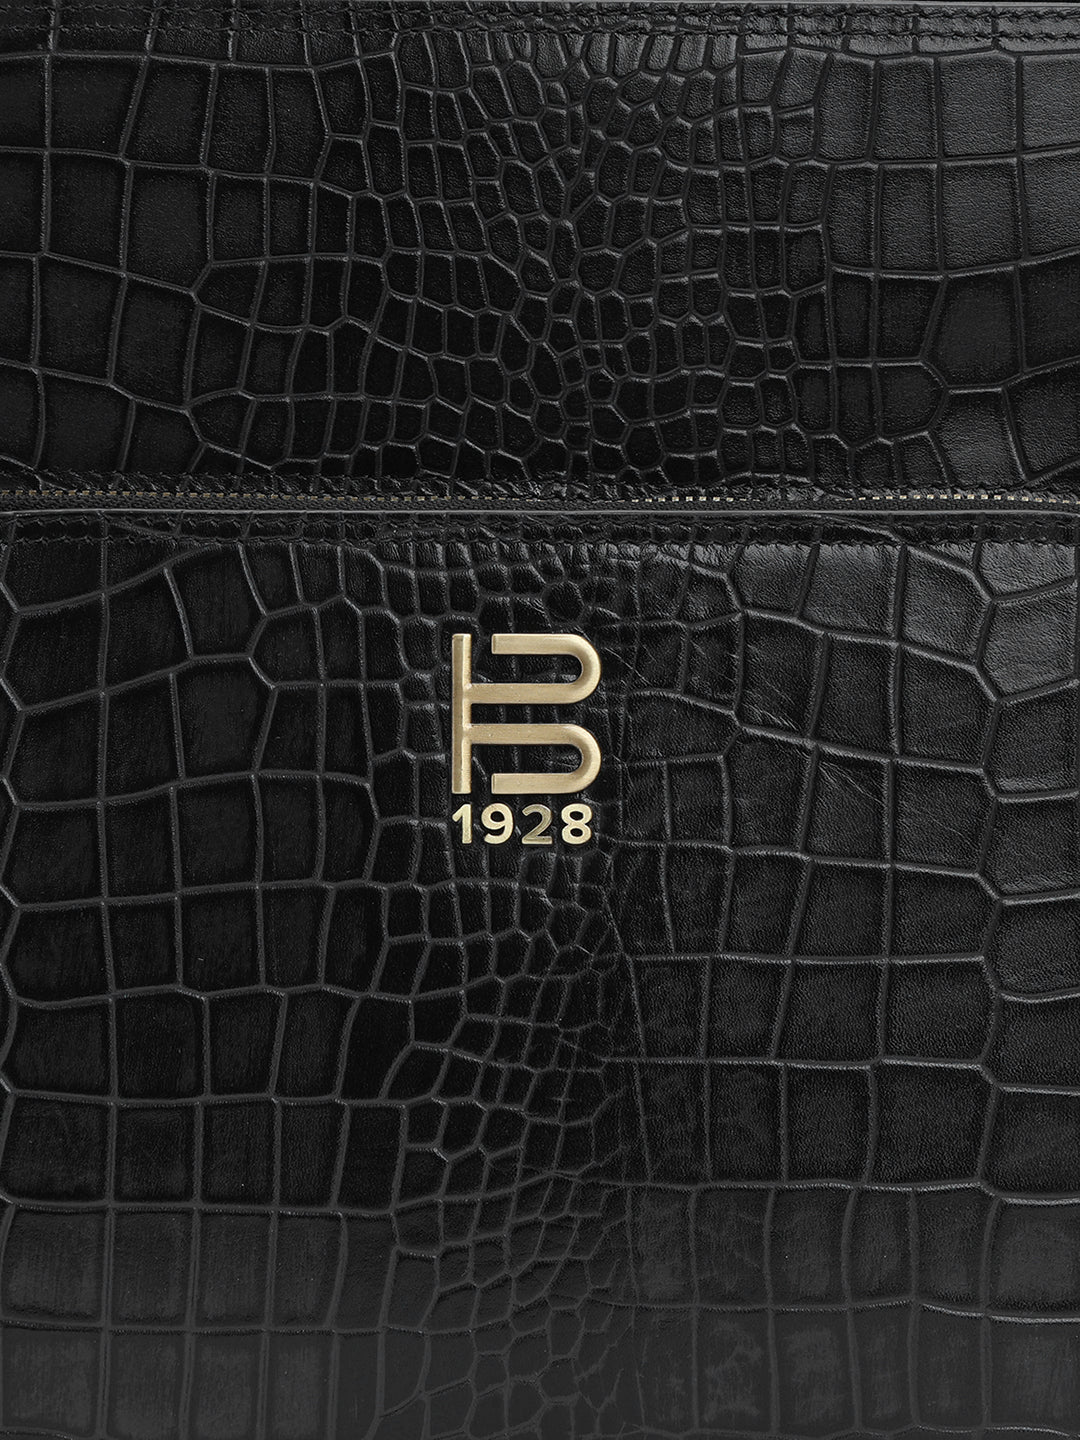 BAGATT Solofra Black Leather Bagpack